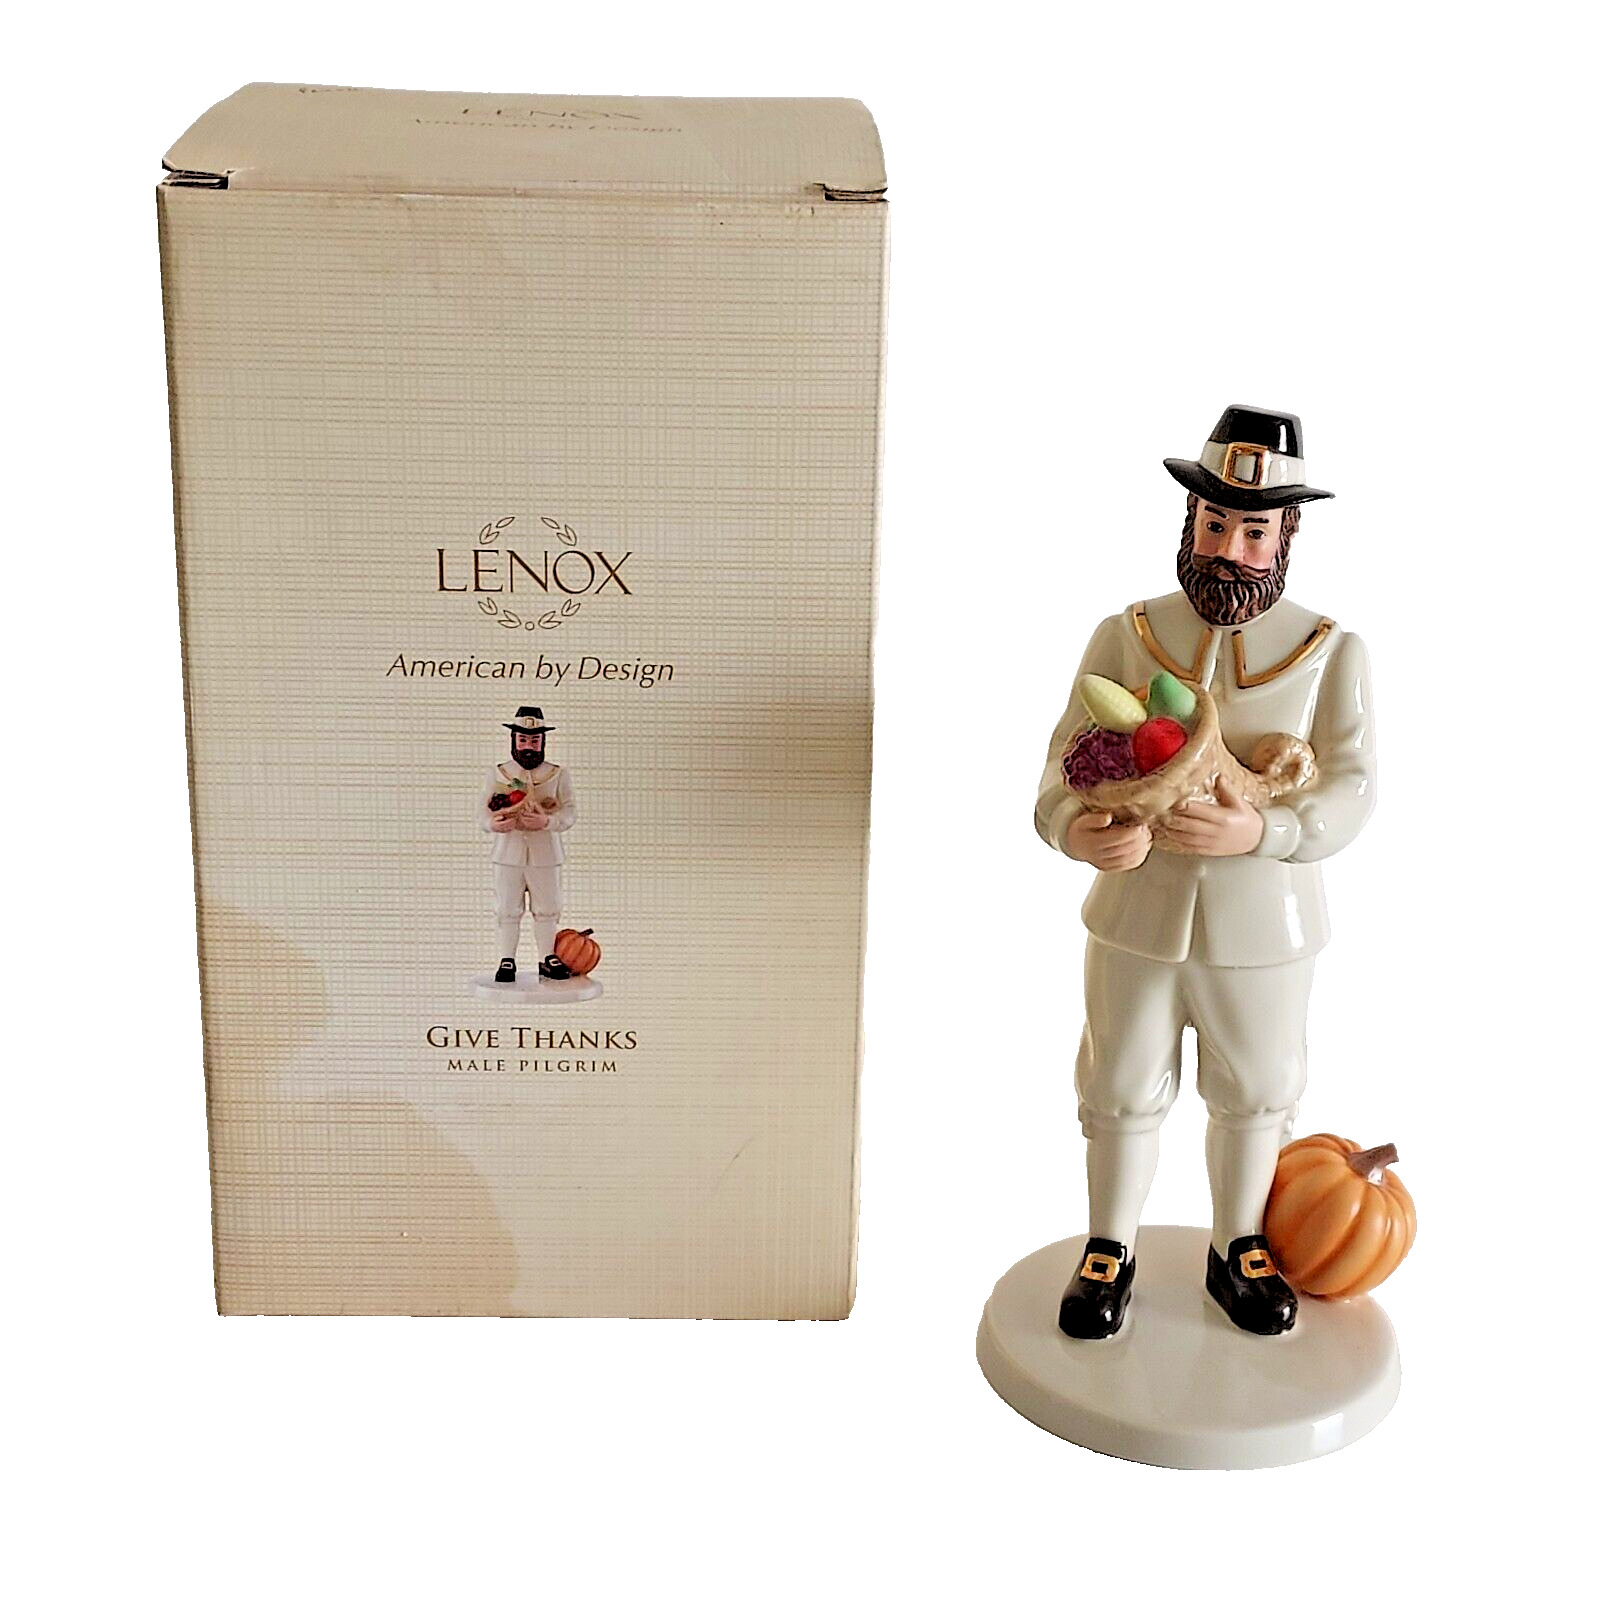 Lenox Figurine #814279 